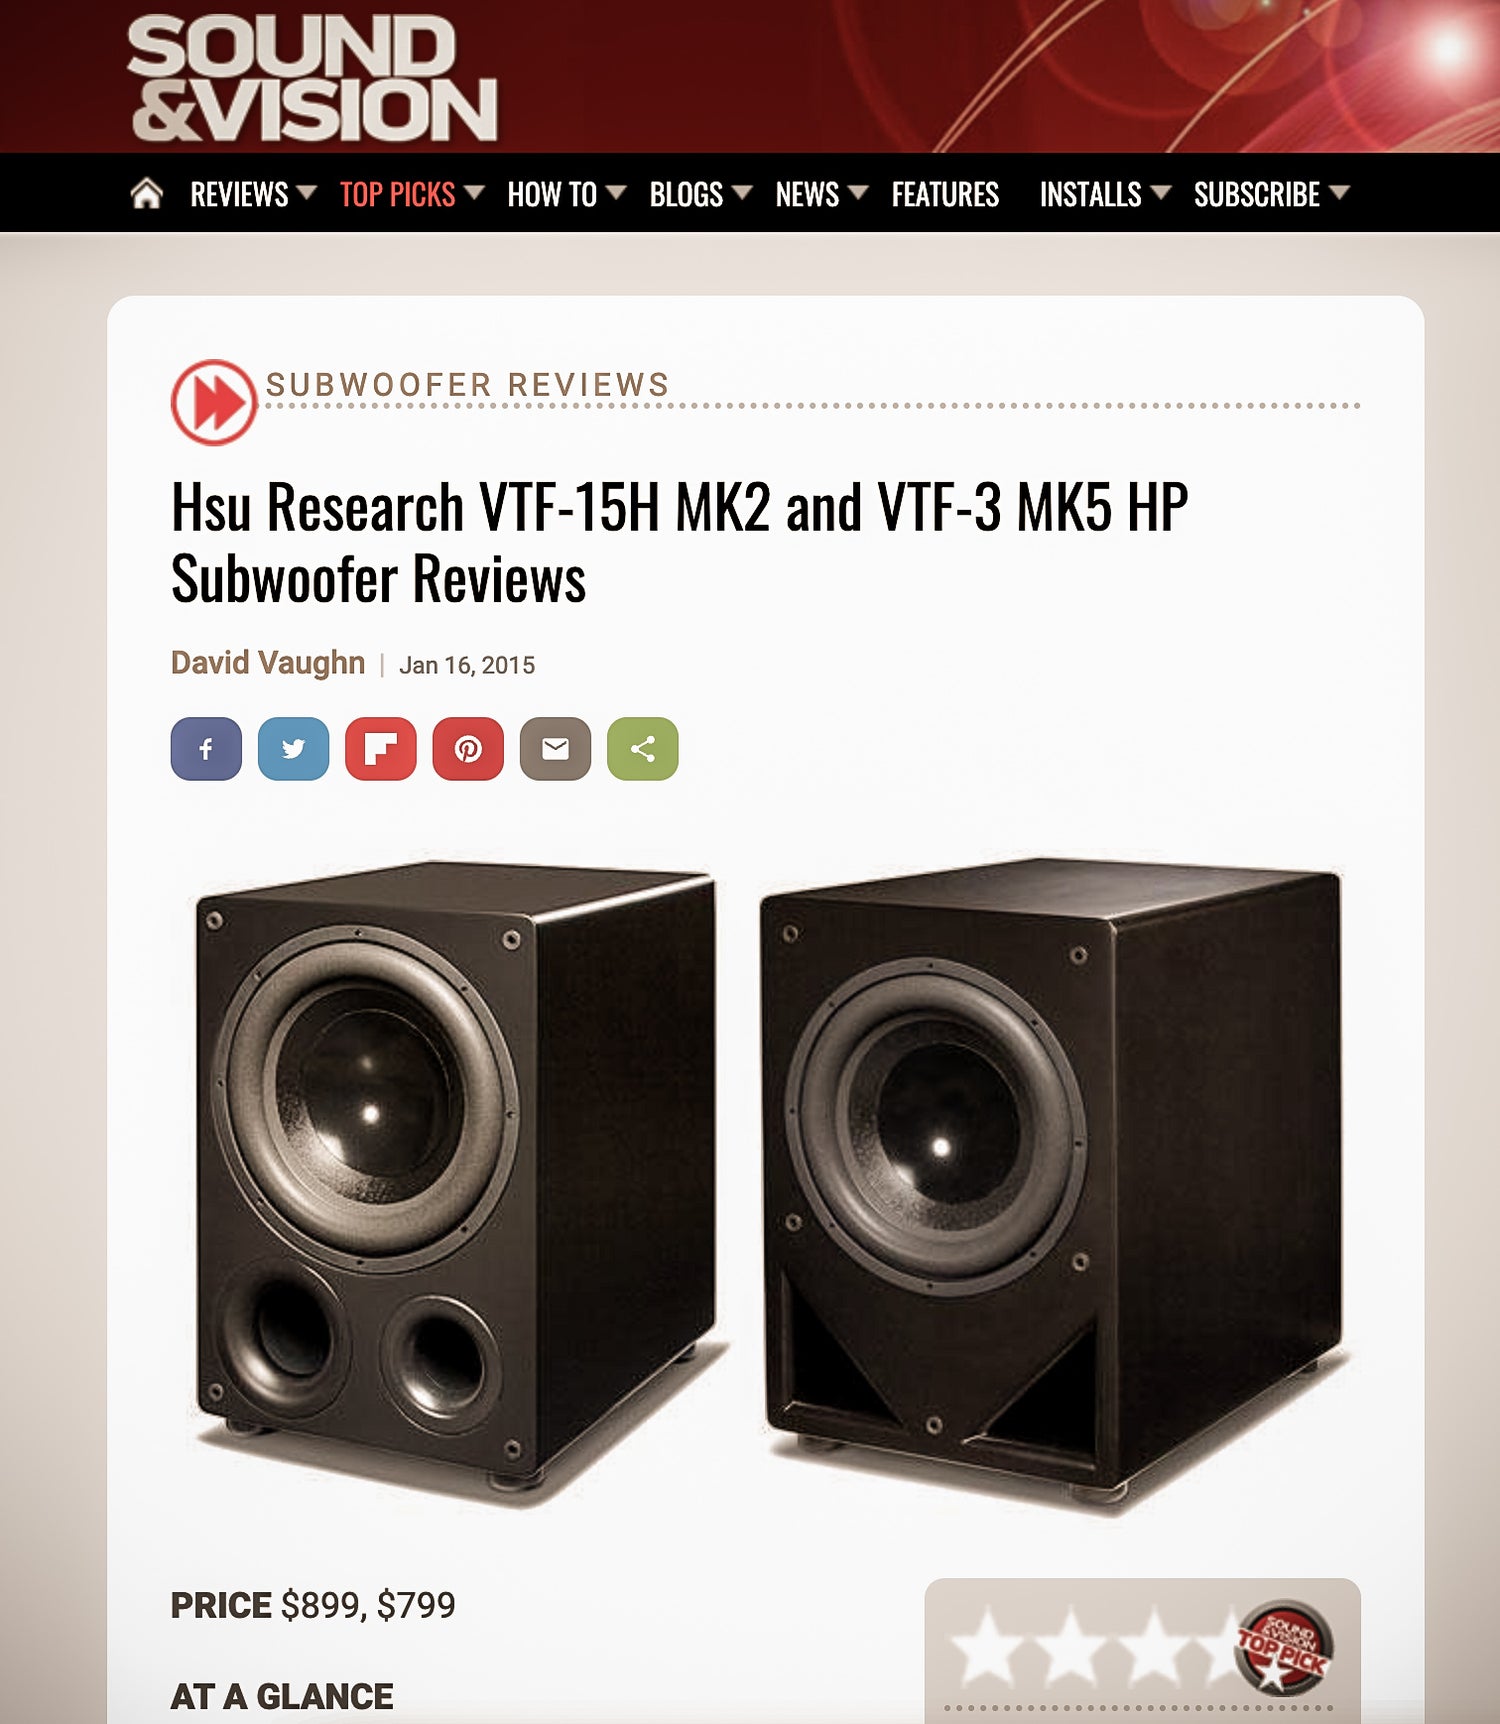 Sound & Vision: VTF-15H MK2 and VTF-3 MK5 HP